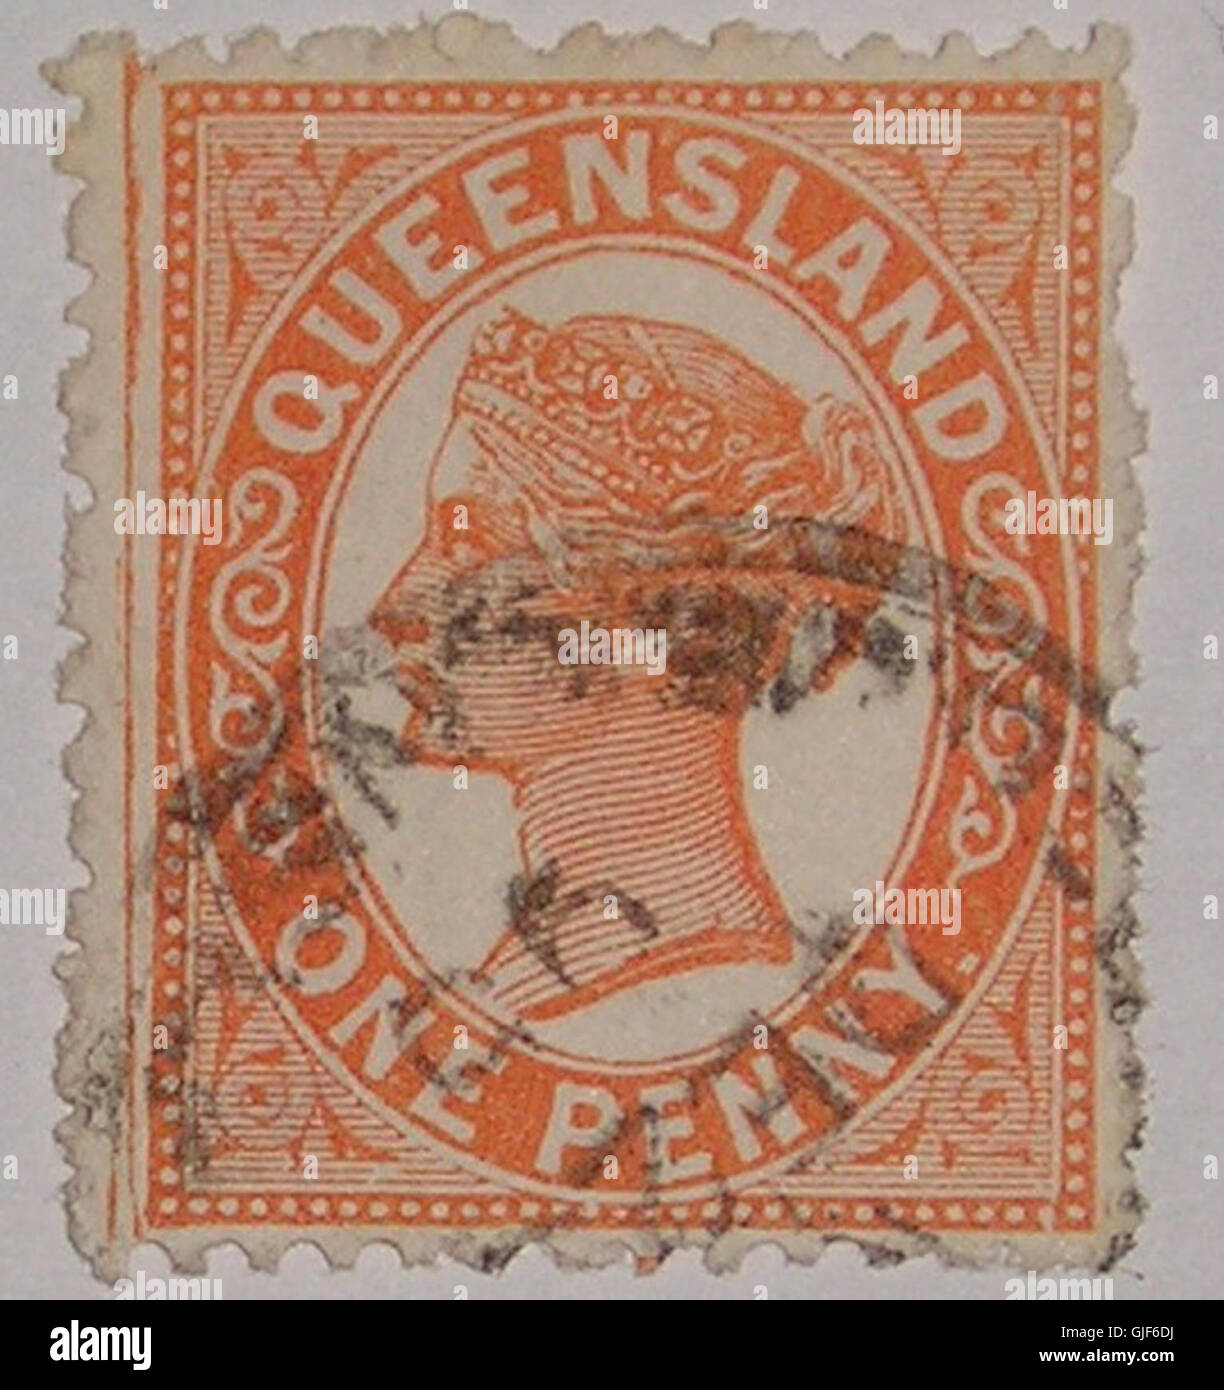 Victoria Timbre du Queensland Australie Stockfoto